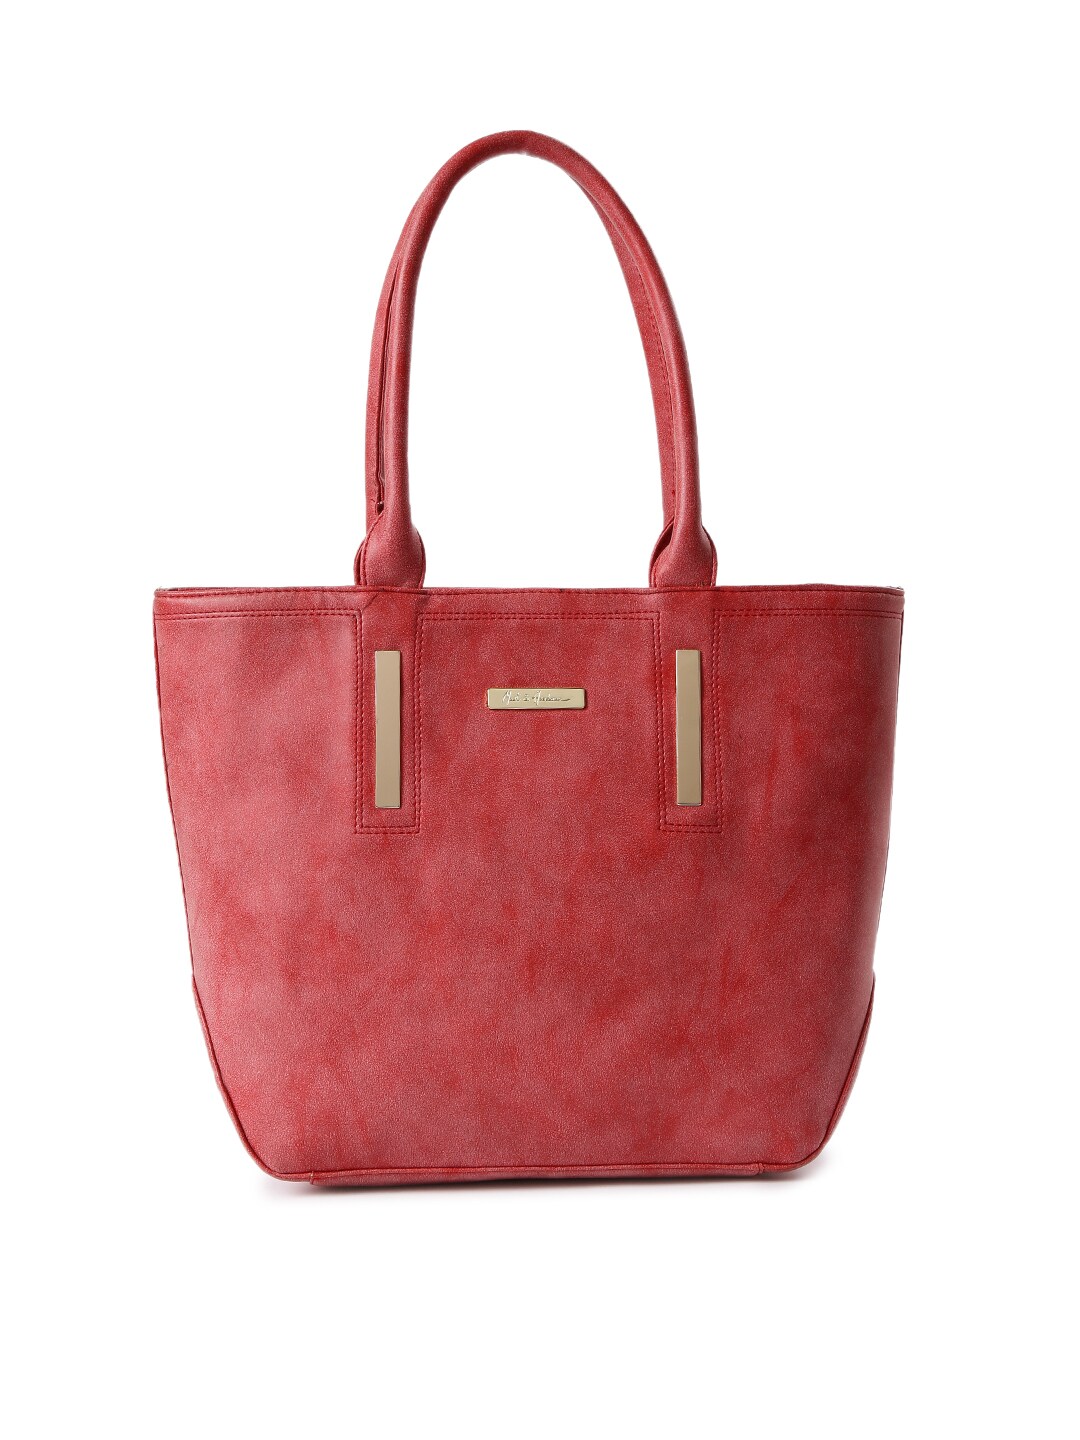 Buy Mast & Harbour Red Shoulder Bag - Handbags for Women | Myntra